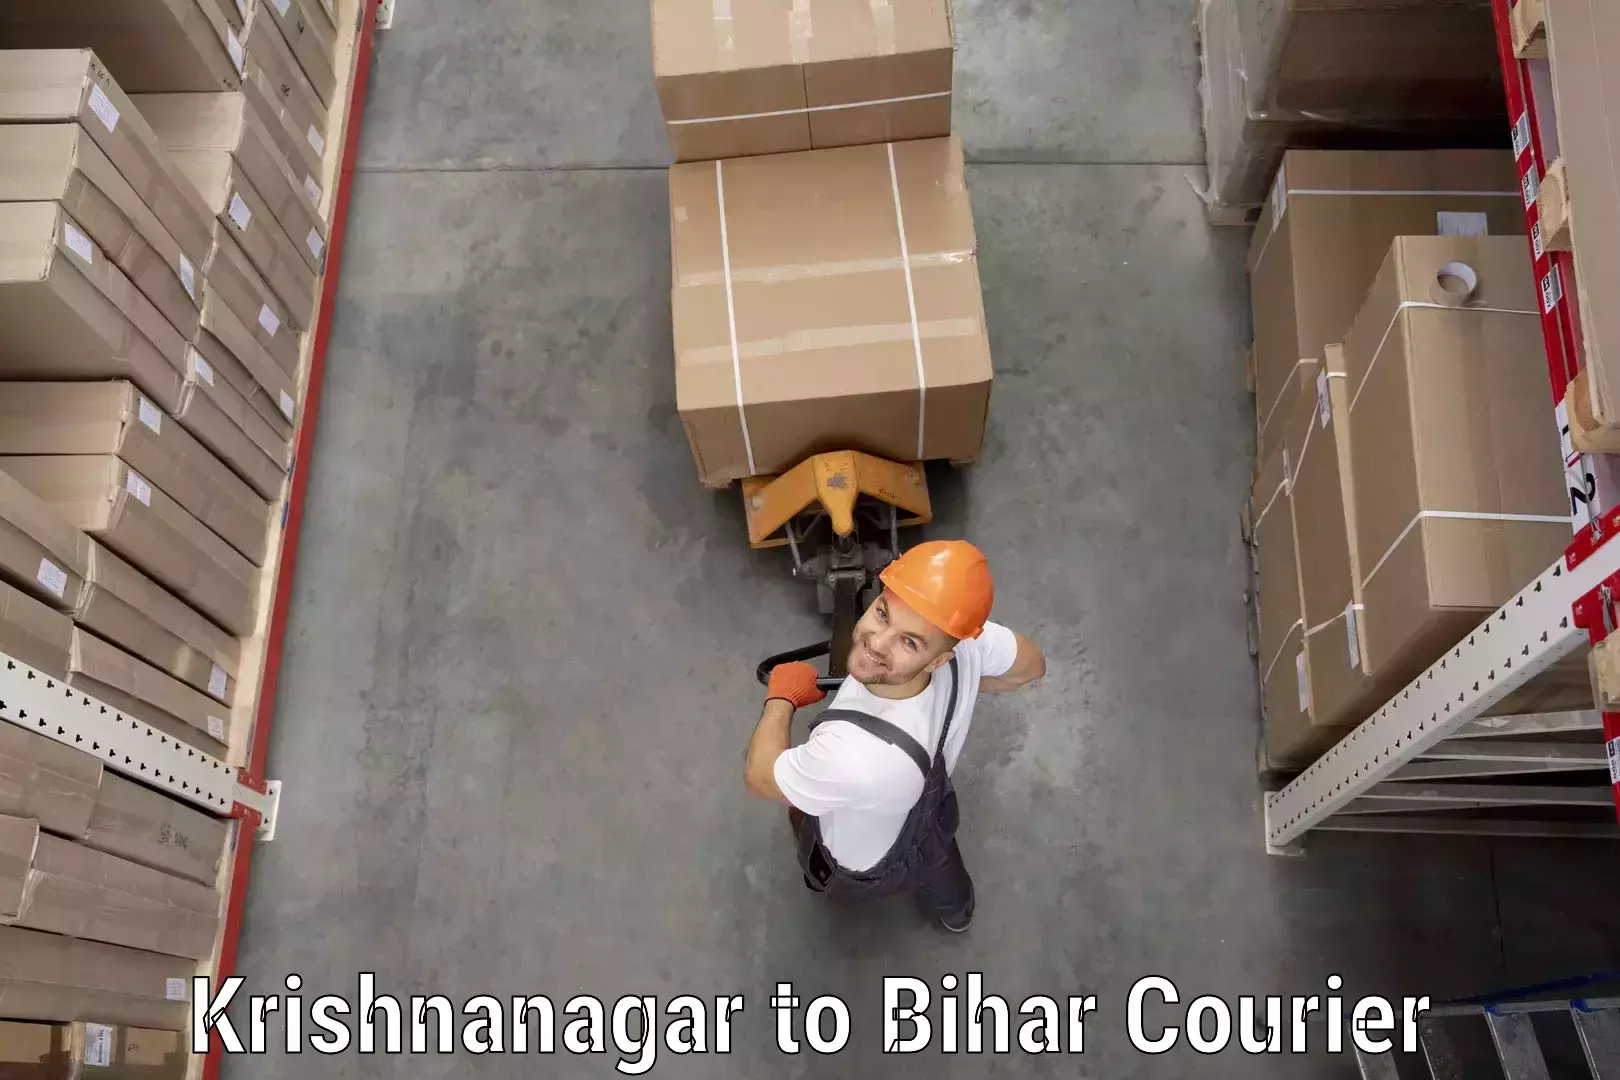 Global shipping networks Krishnanagar to Bhorey